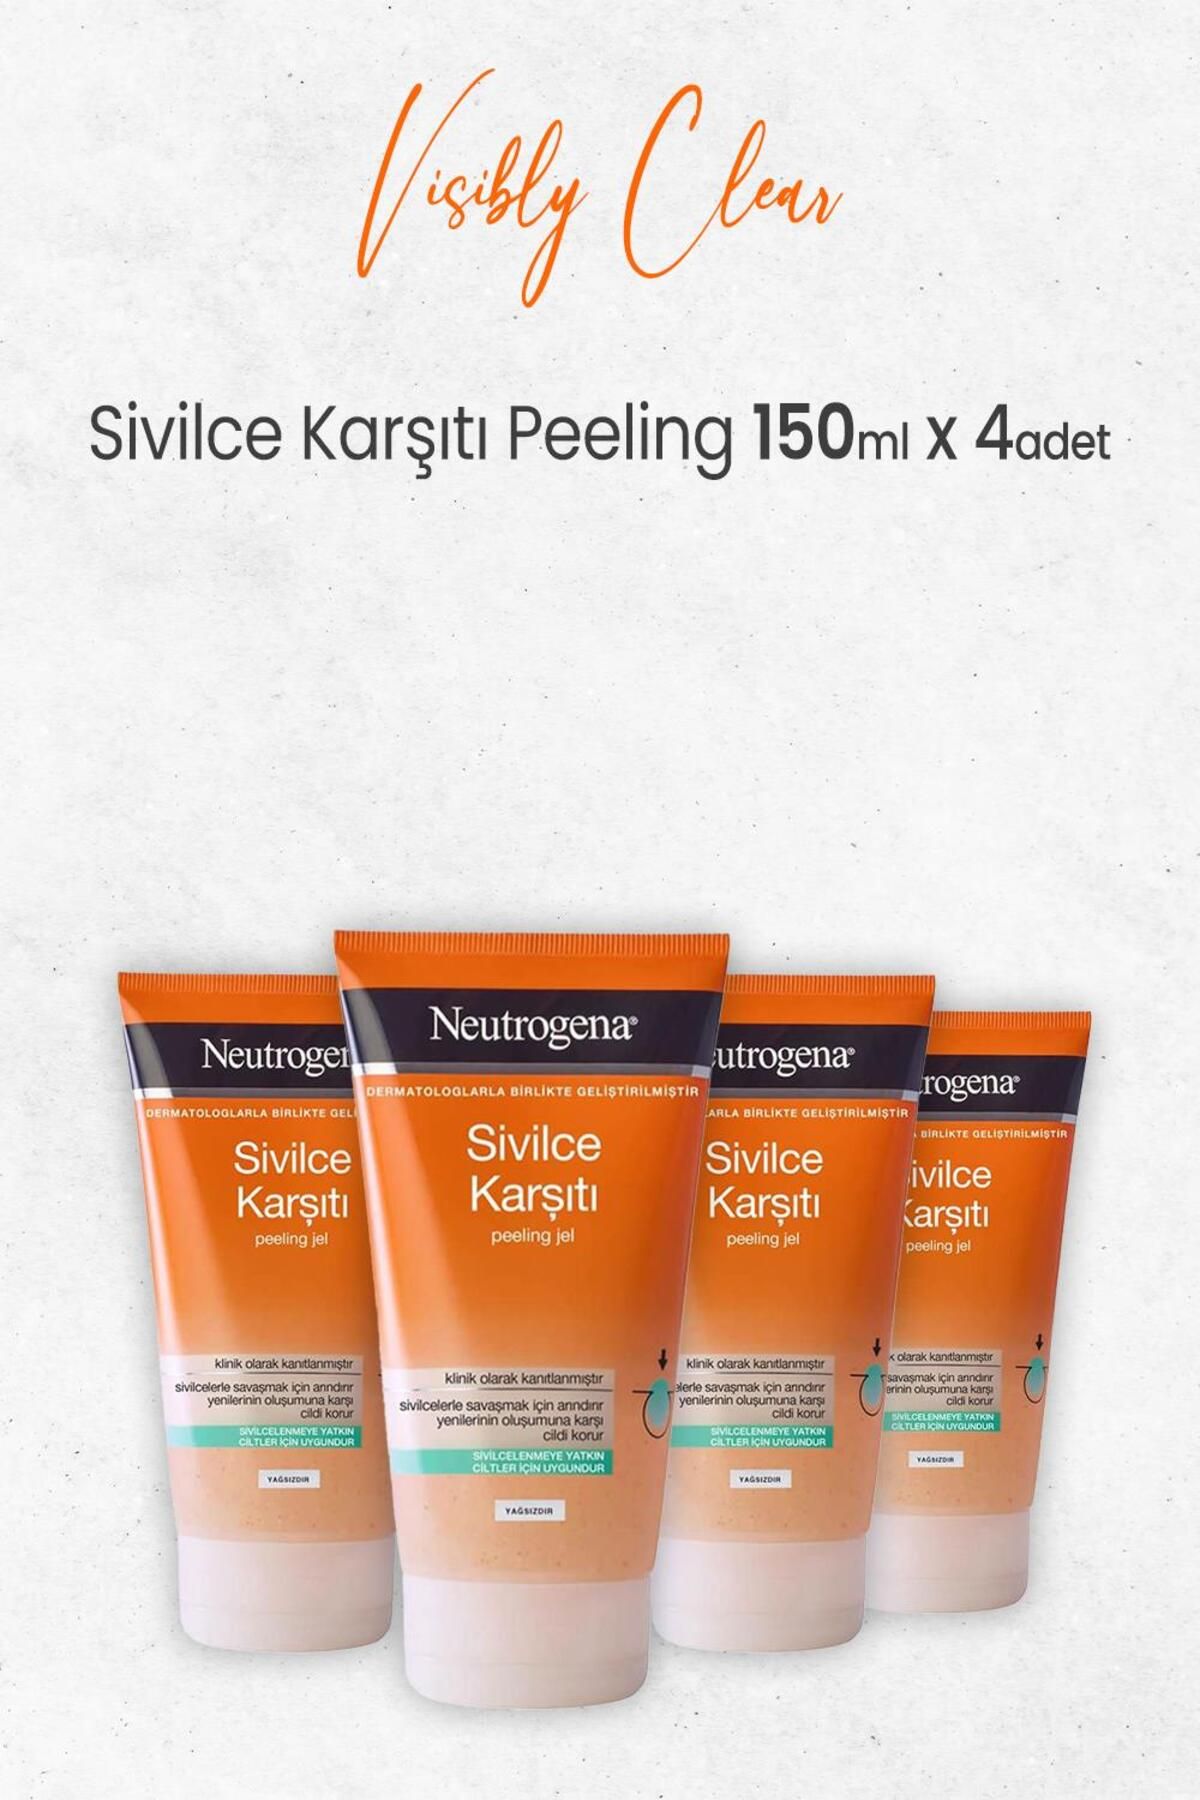 Neutrogena Visibly Clear Sivilce Karşıtı Peeling 150 ml X 4 Adet